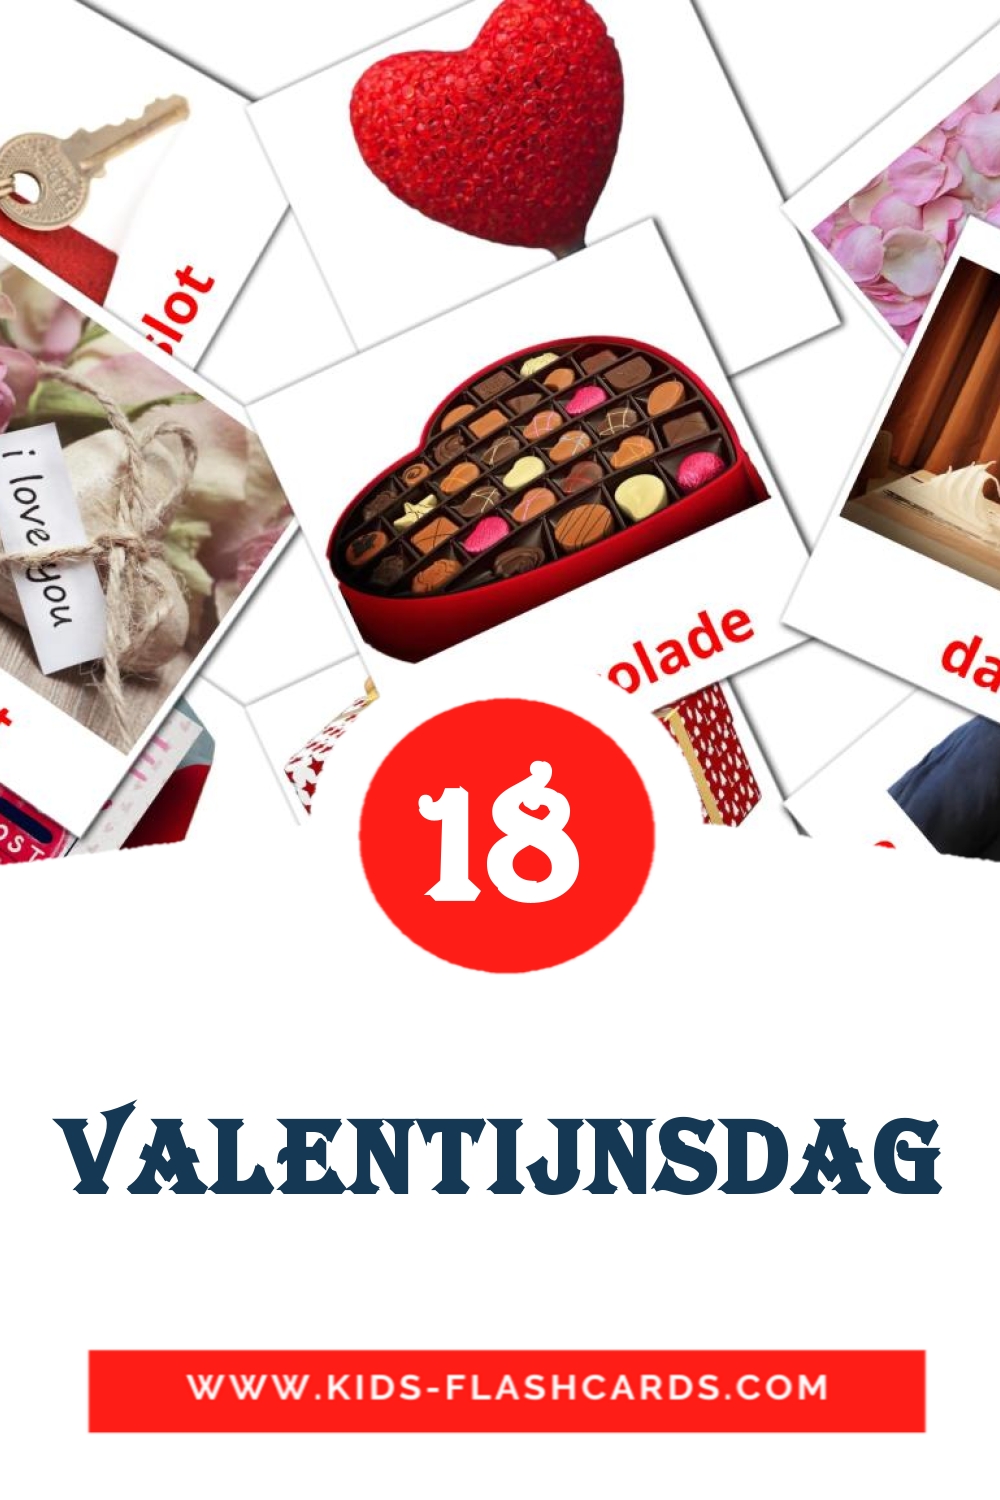 Valentijnsdag на нидерландcком для Детского Сада (18 карточек)